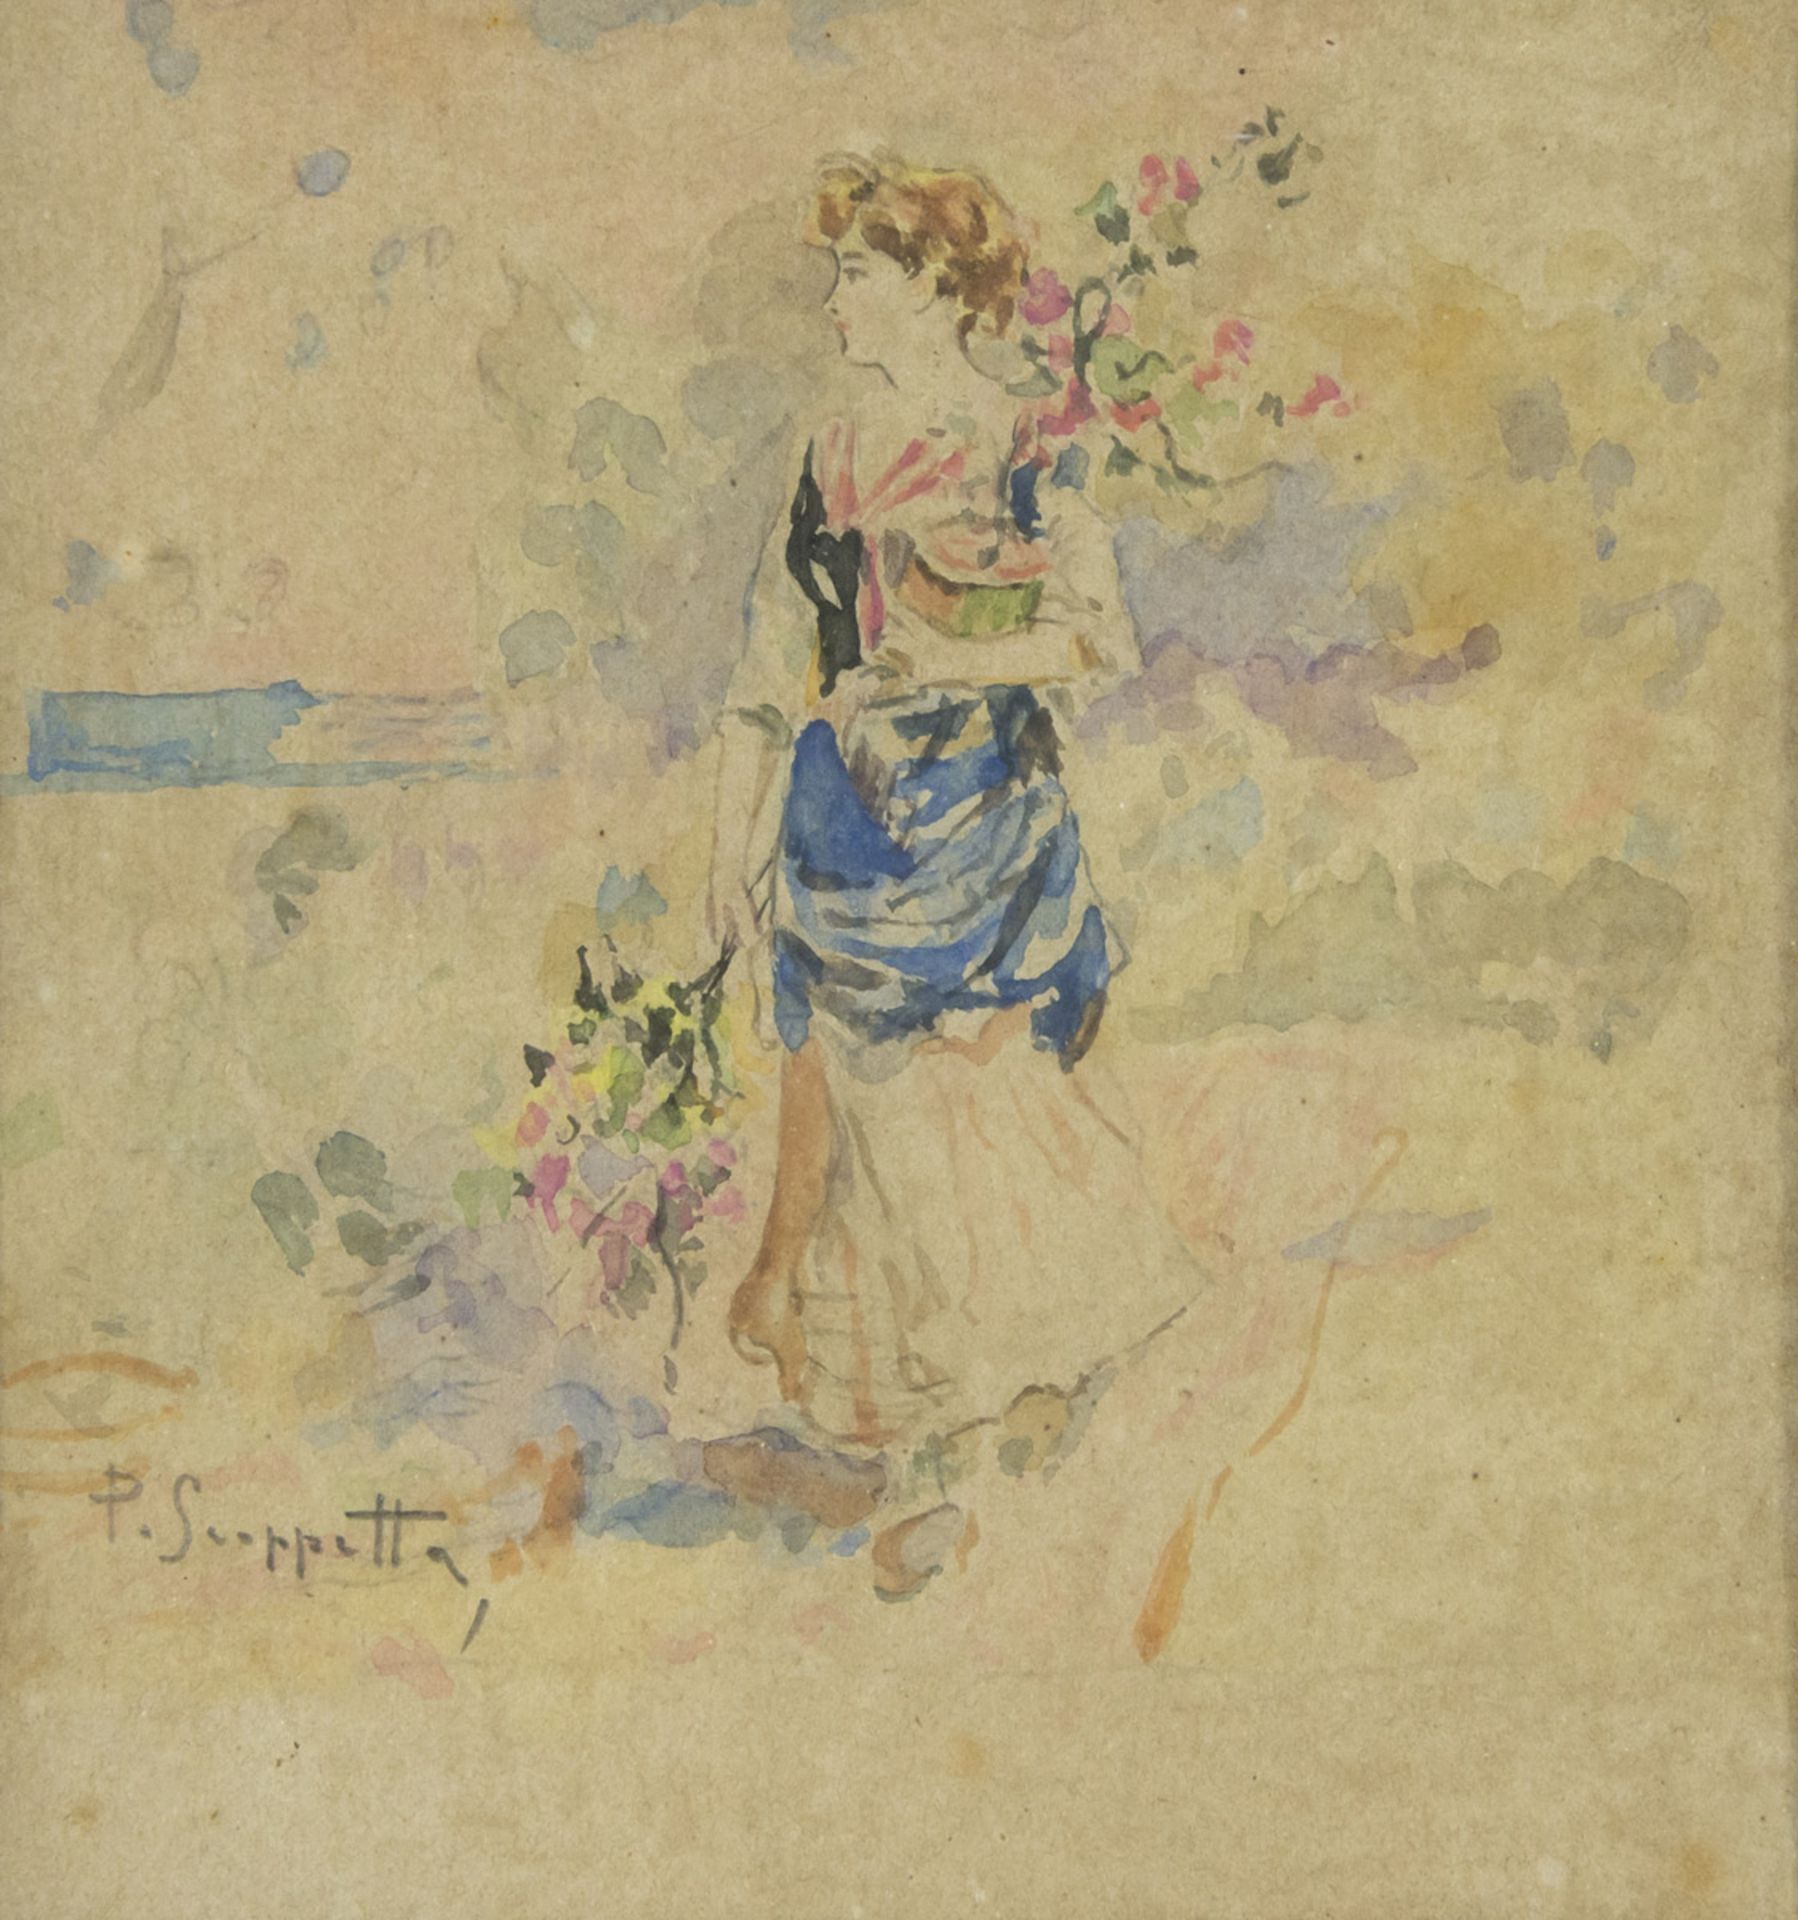 PIETRO SCOPPETTA (Amalfi 1863 - Naples 1920) ALLEGORY OF THE SPRING Watercolour on paper, cm. 14 x